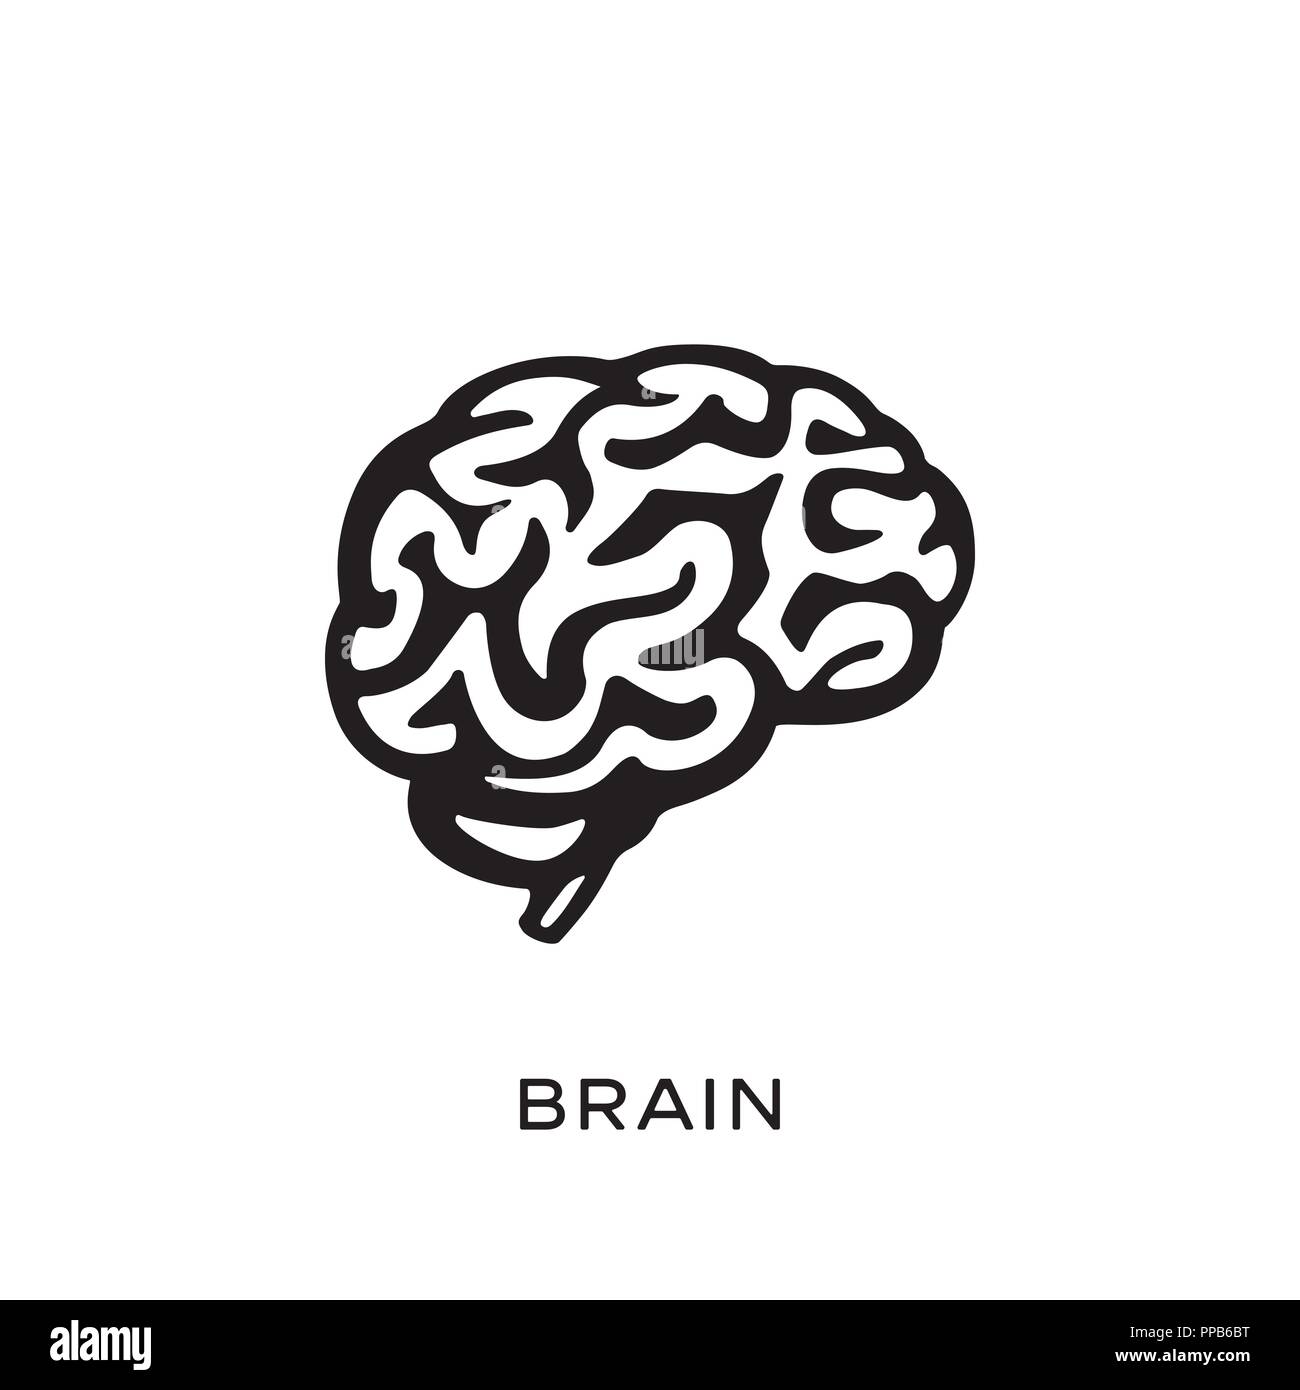 Human brain silhouette design vector illustration. Think idea concept. Brainstorm power thinking brain Stock Vector